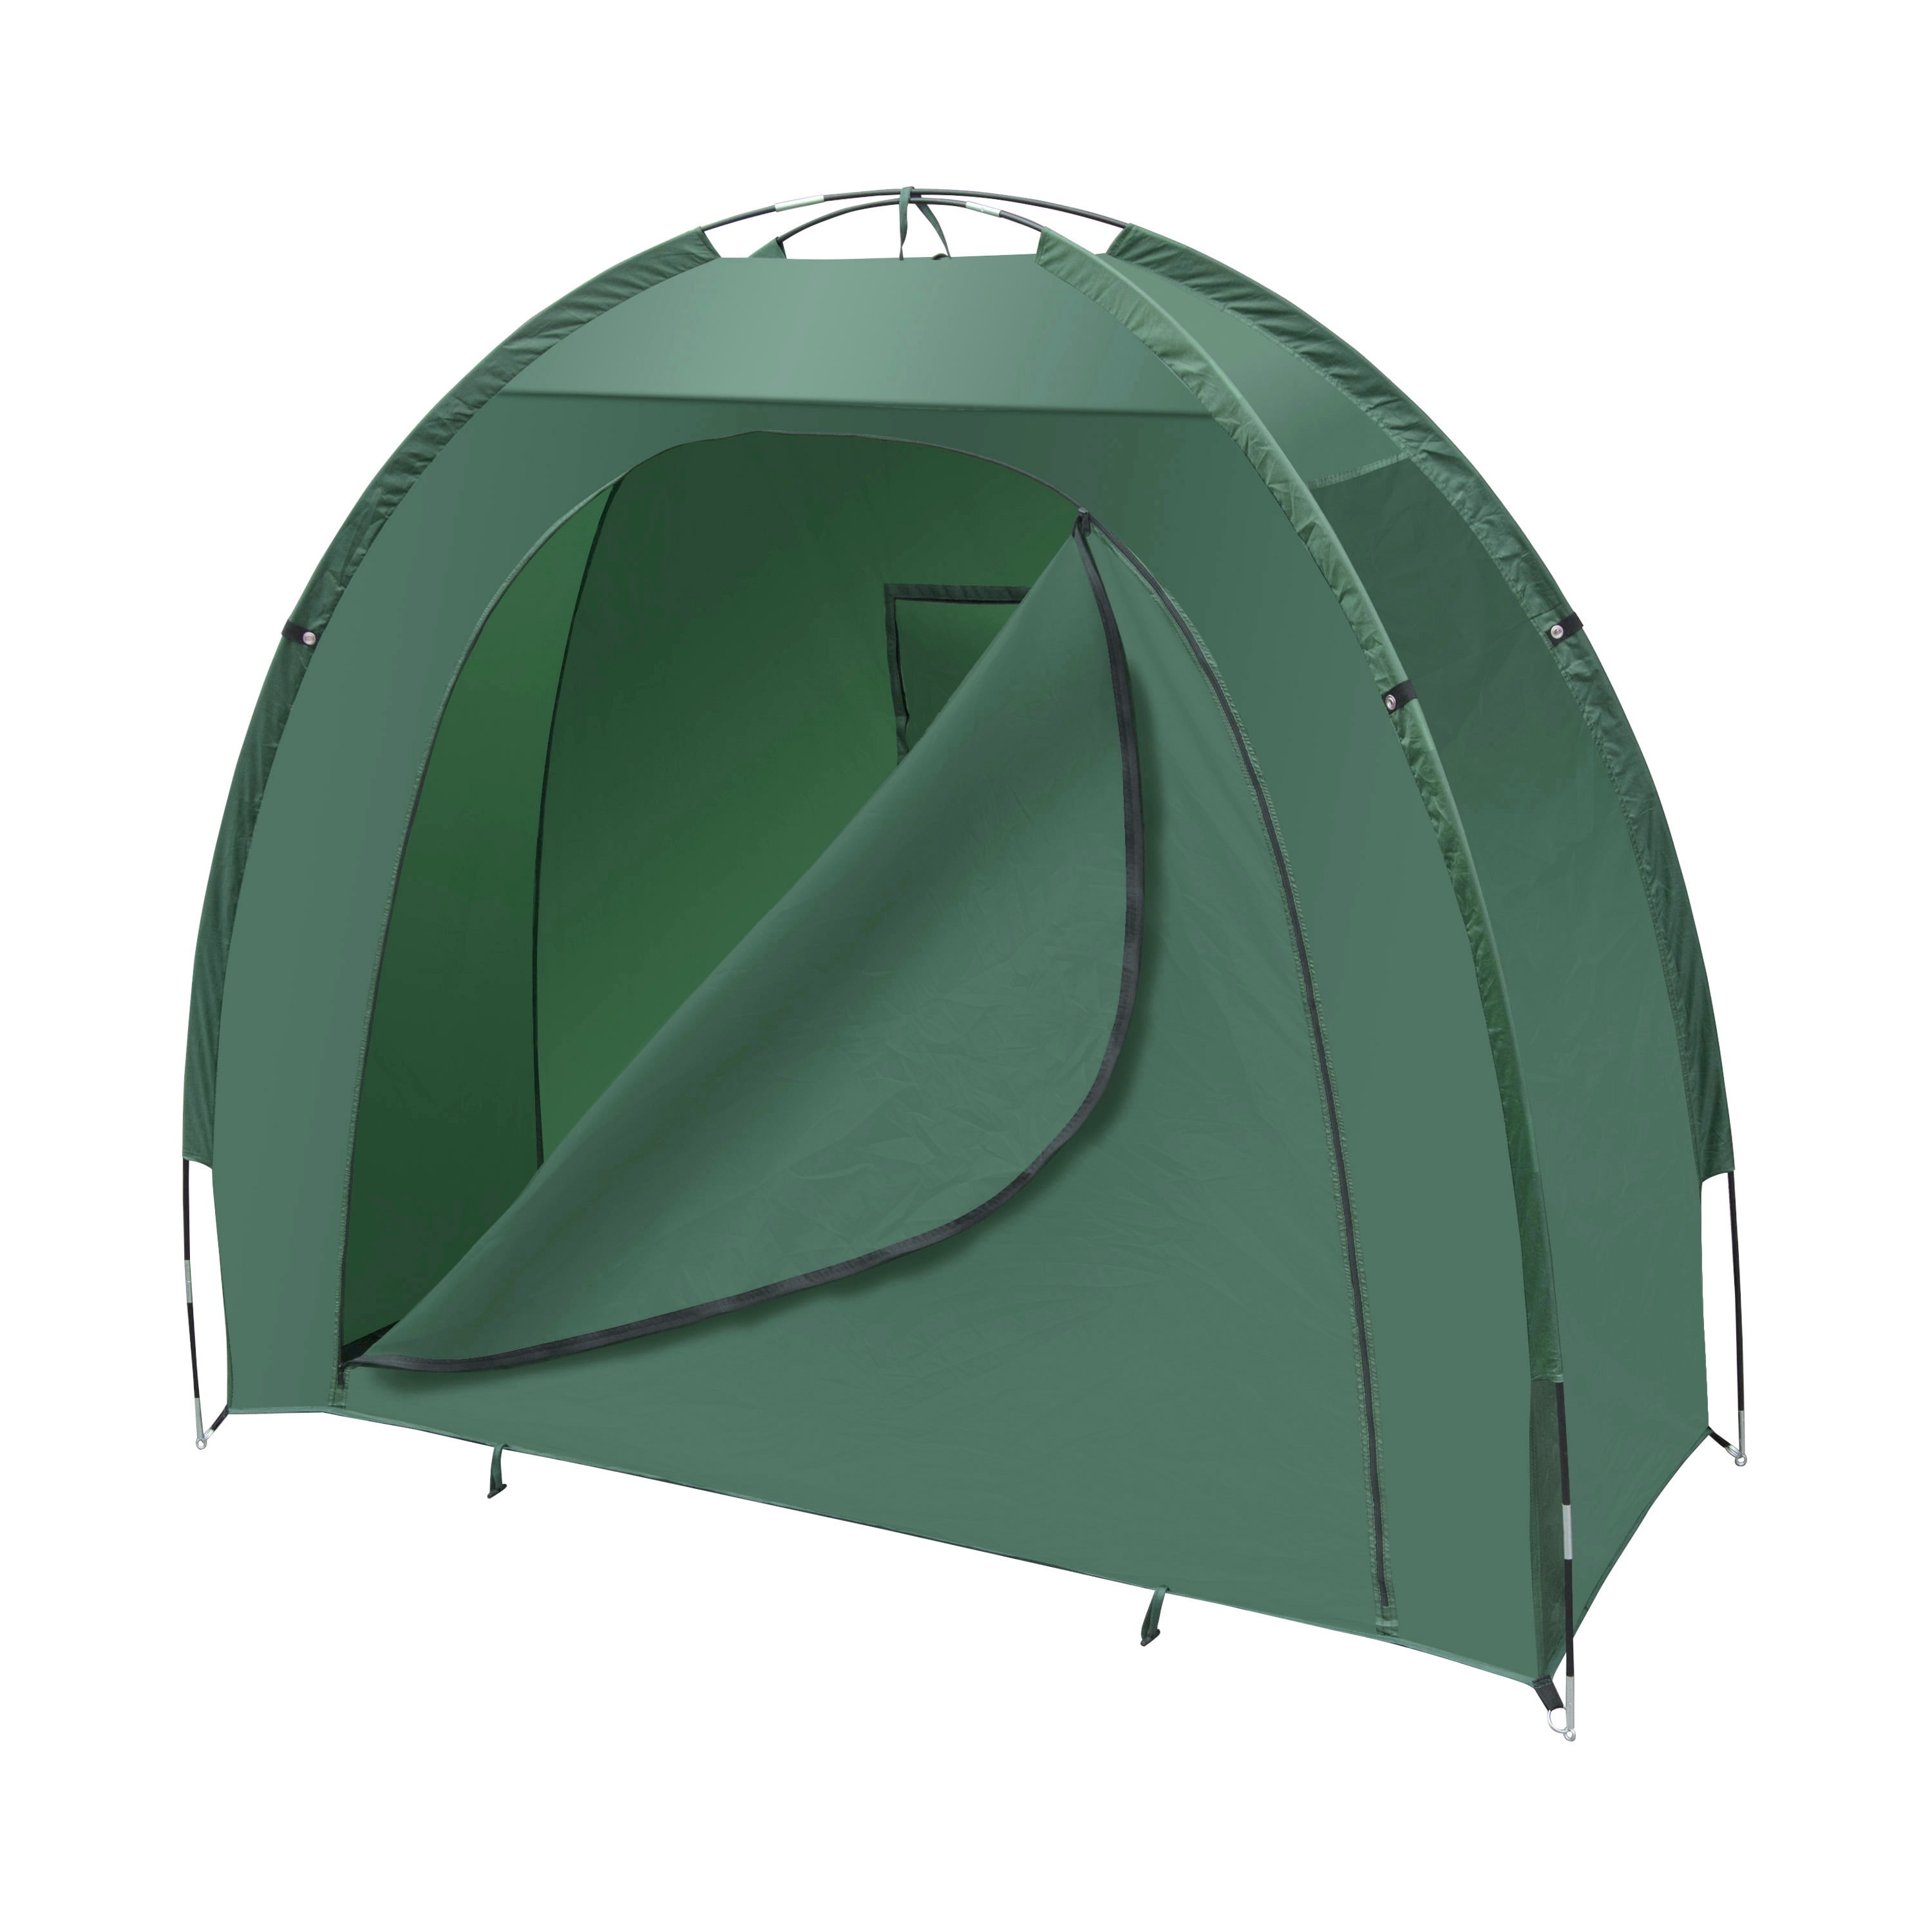 ALEKO Weather Resistant Bike Storage Tent Green Color 